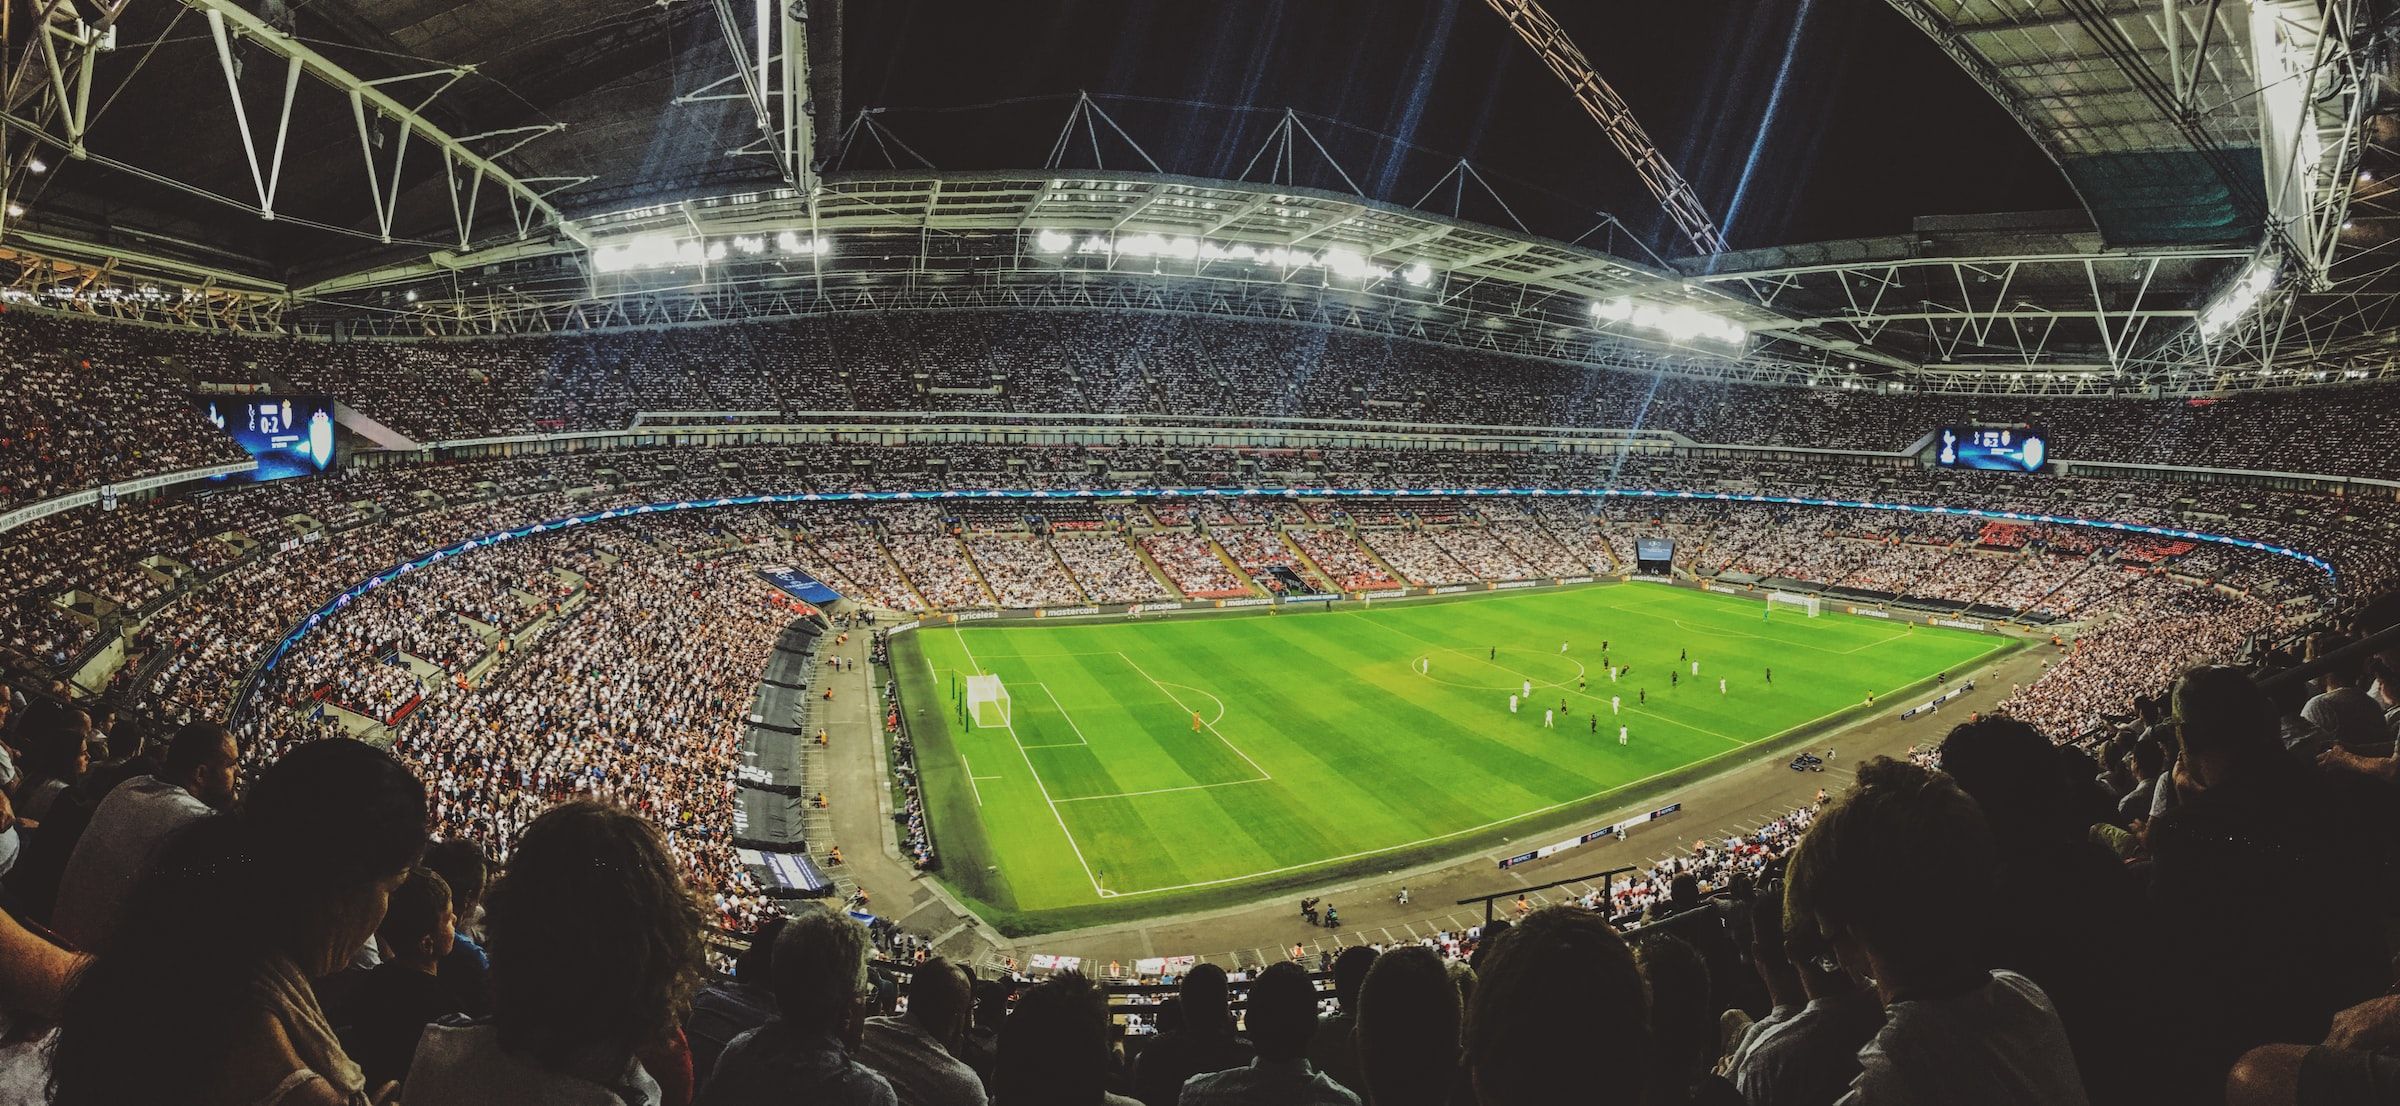 Wembley Stadium – Filming locations